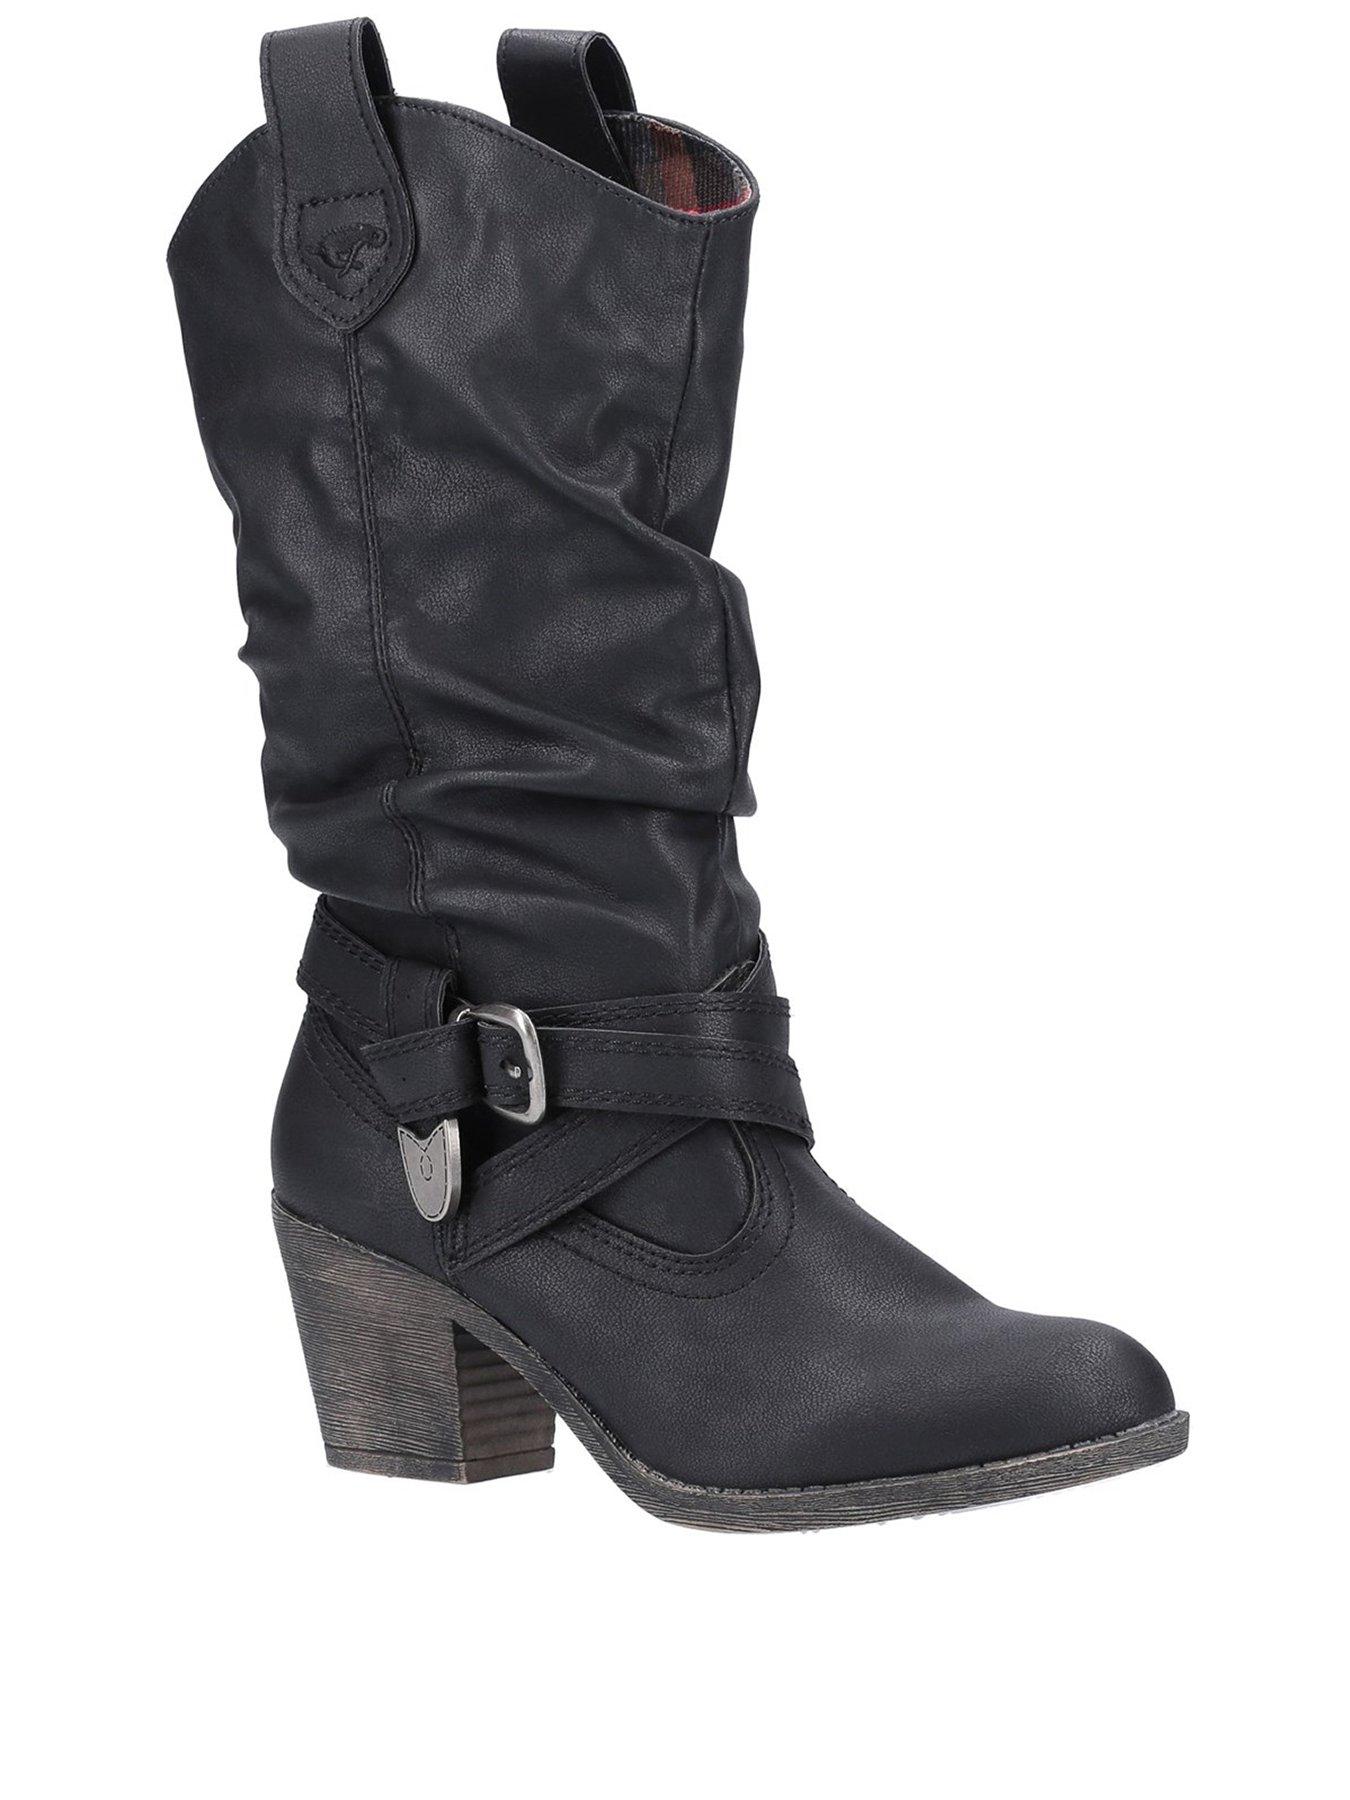  Sidestep Knee High Boots - Black